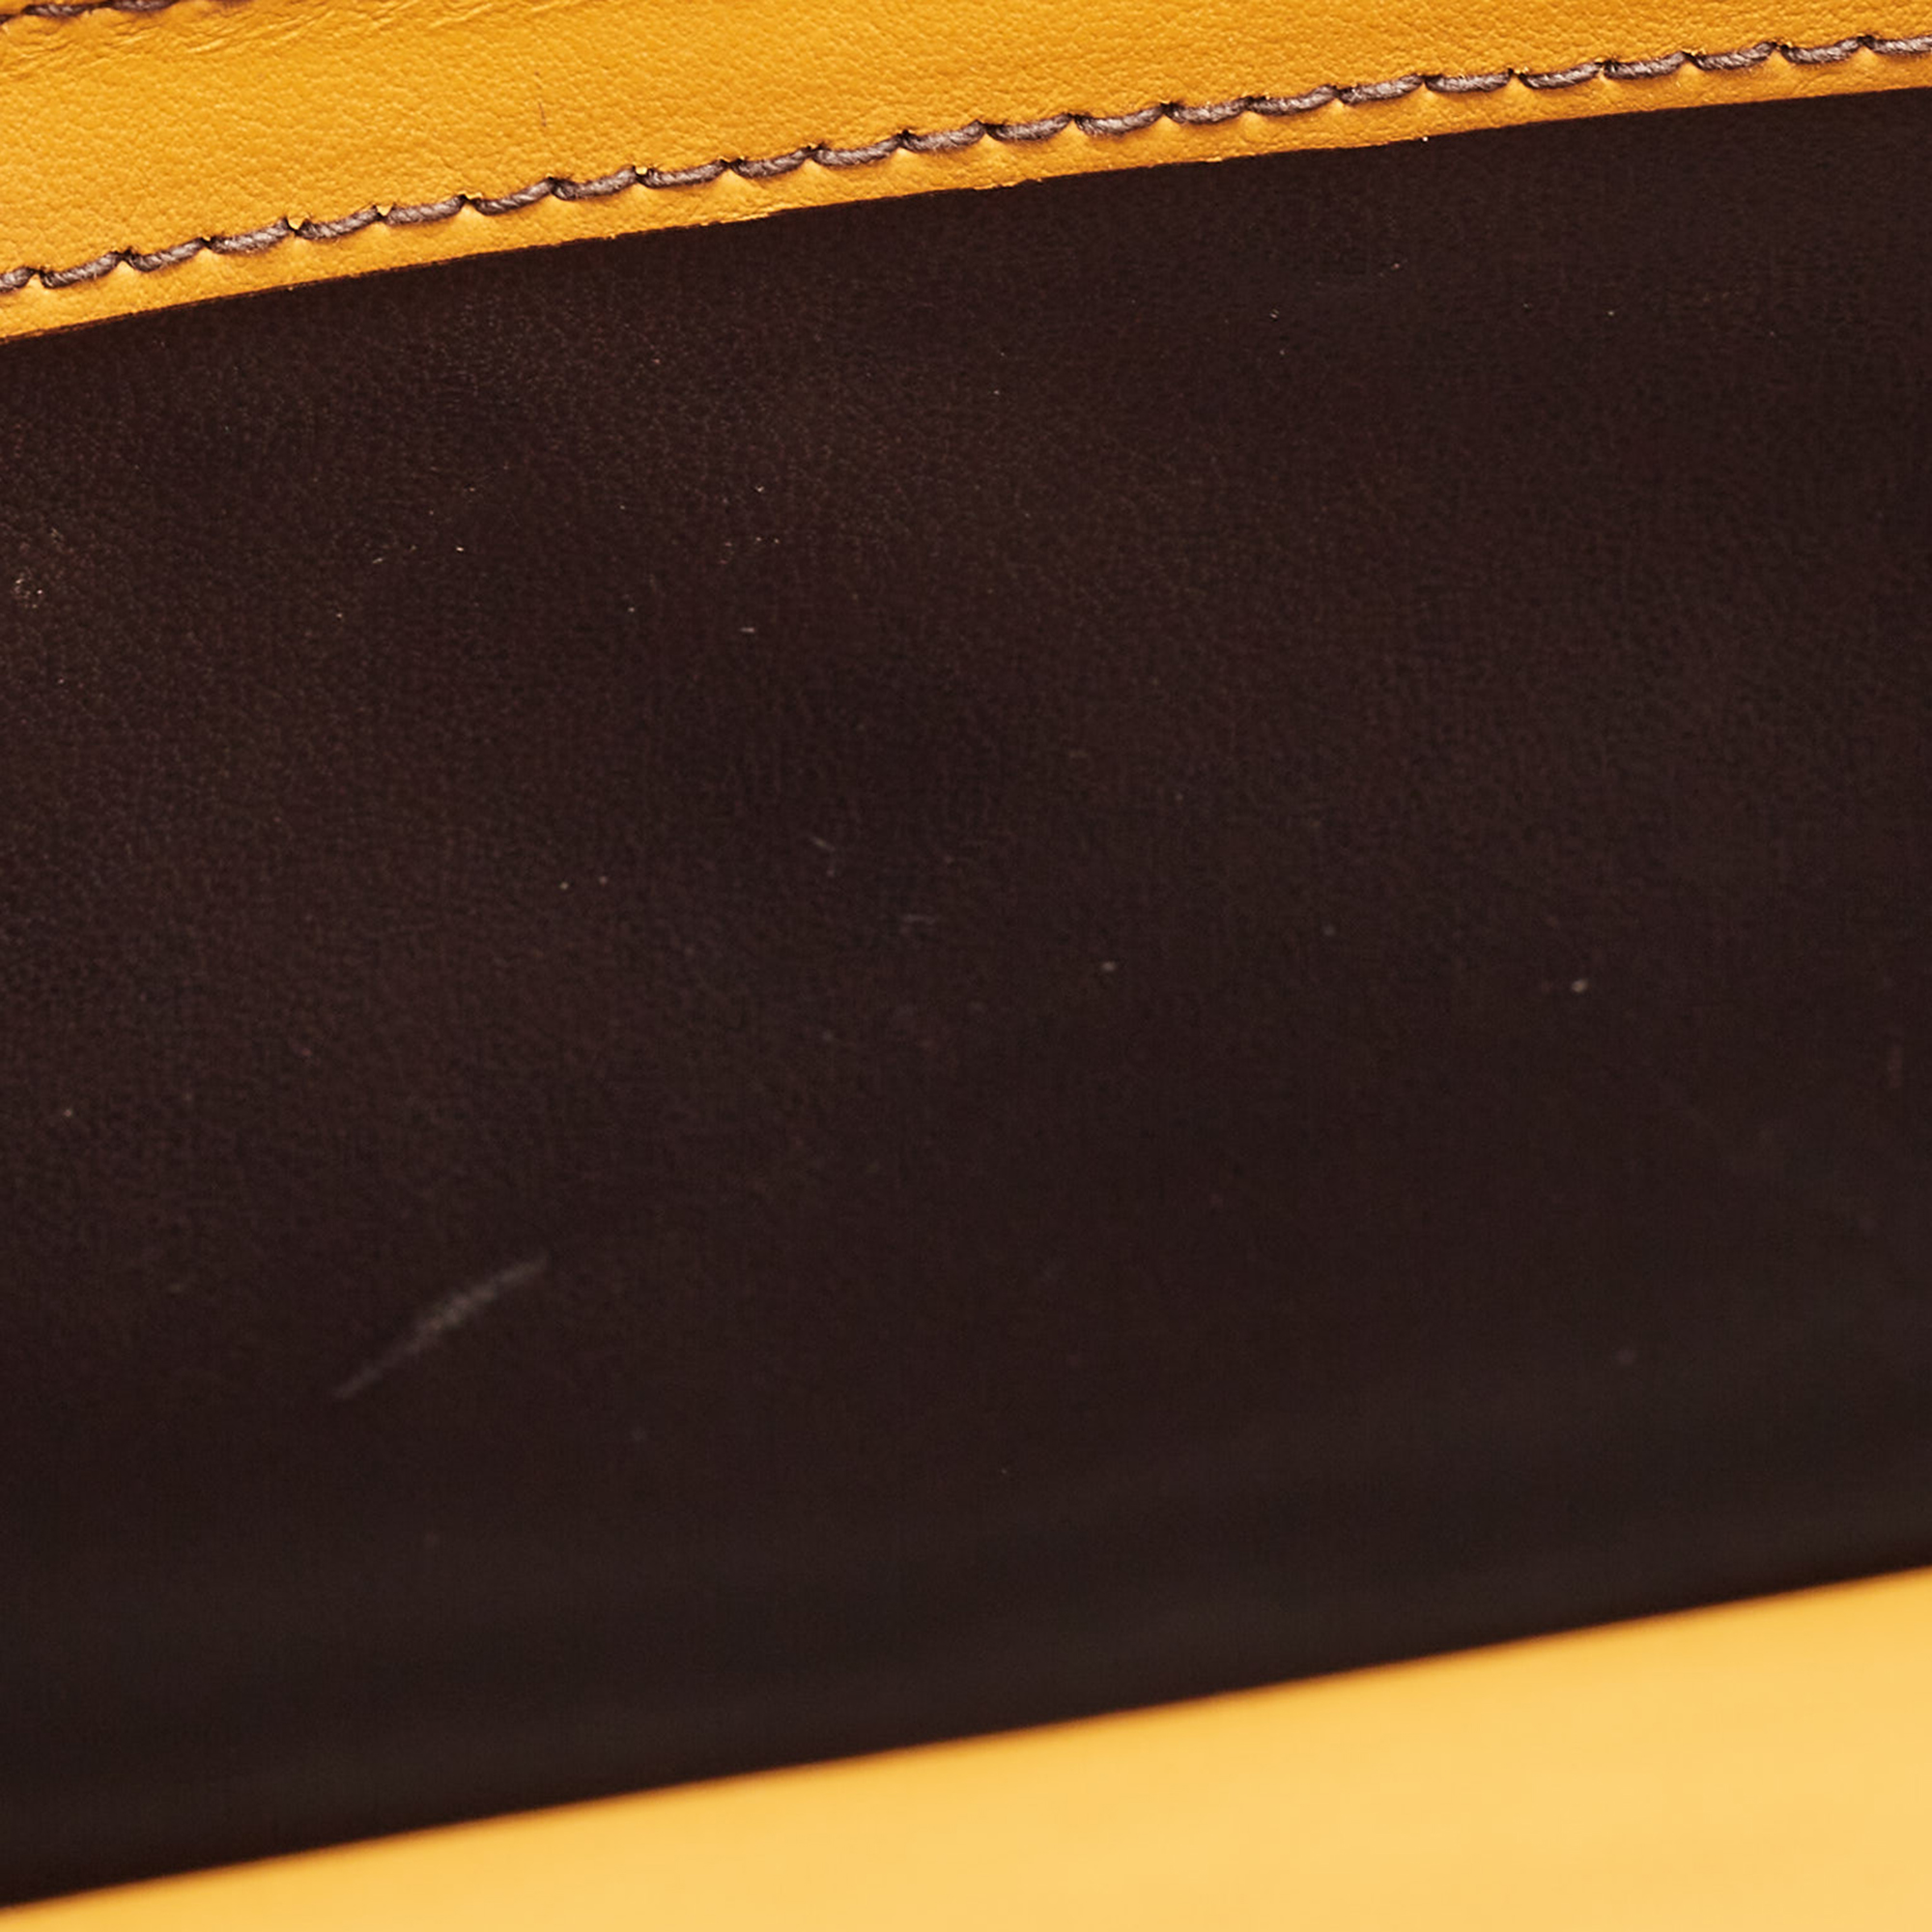 Prada Mustard Yellow/Choco Brown Leather Pionniere Saddle Bag